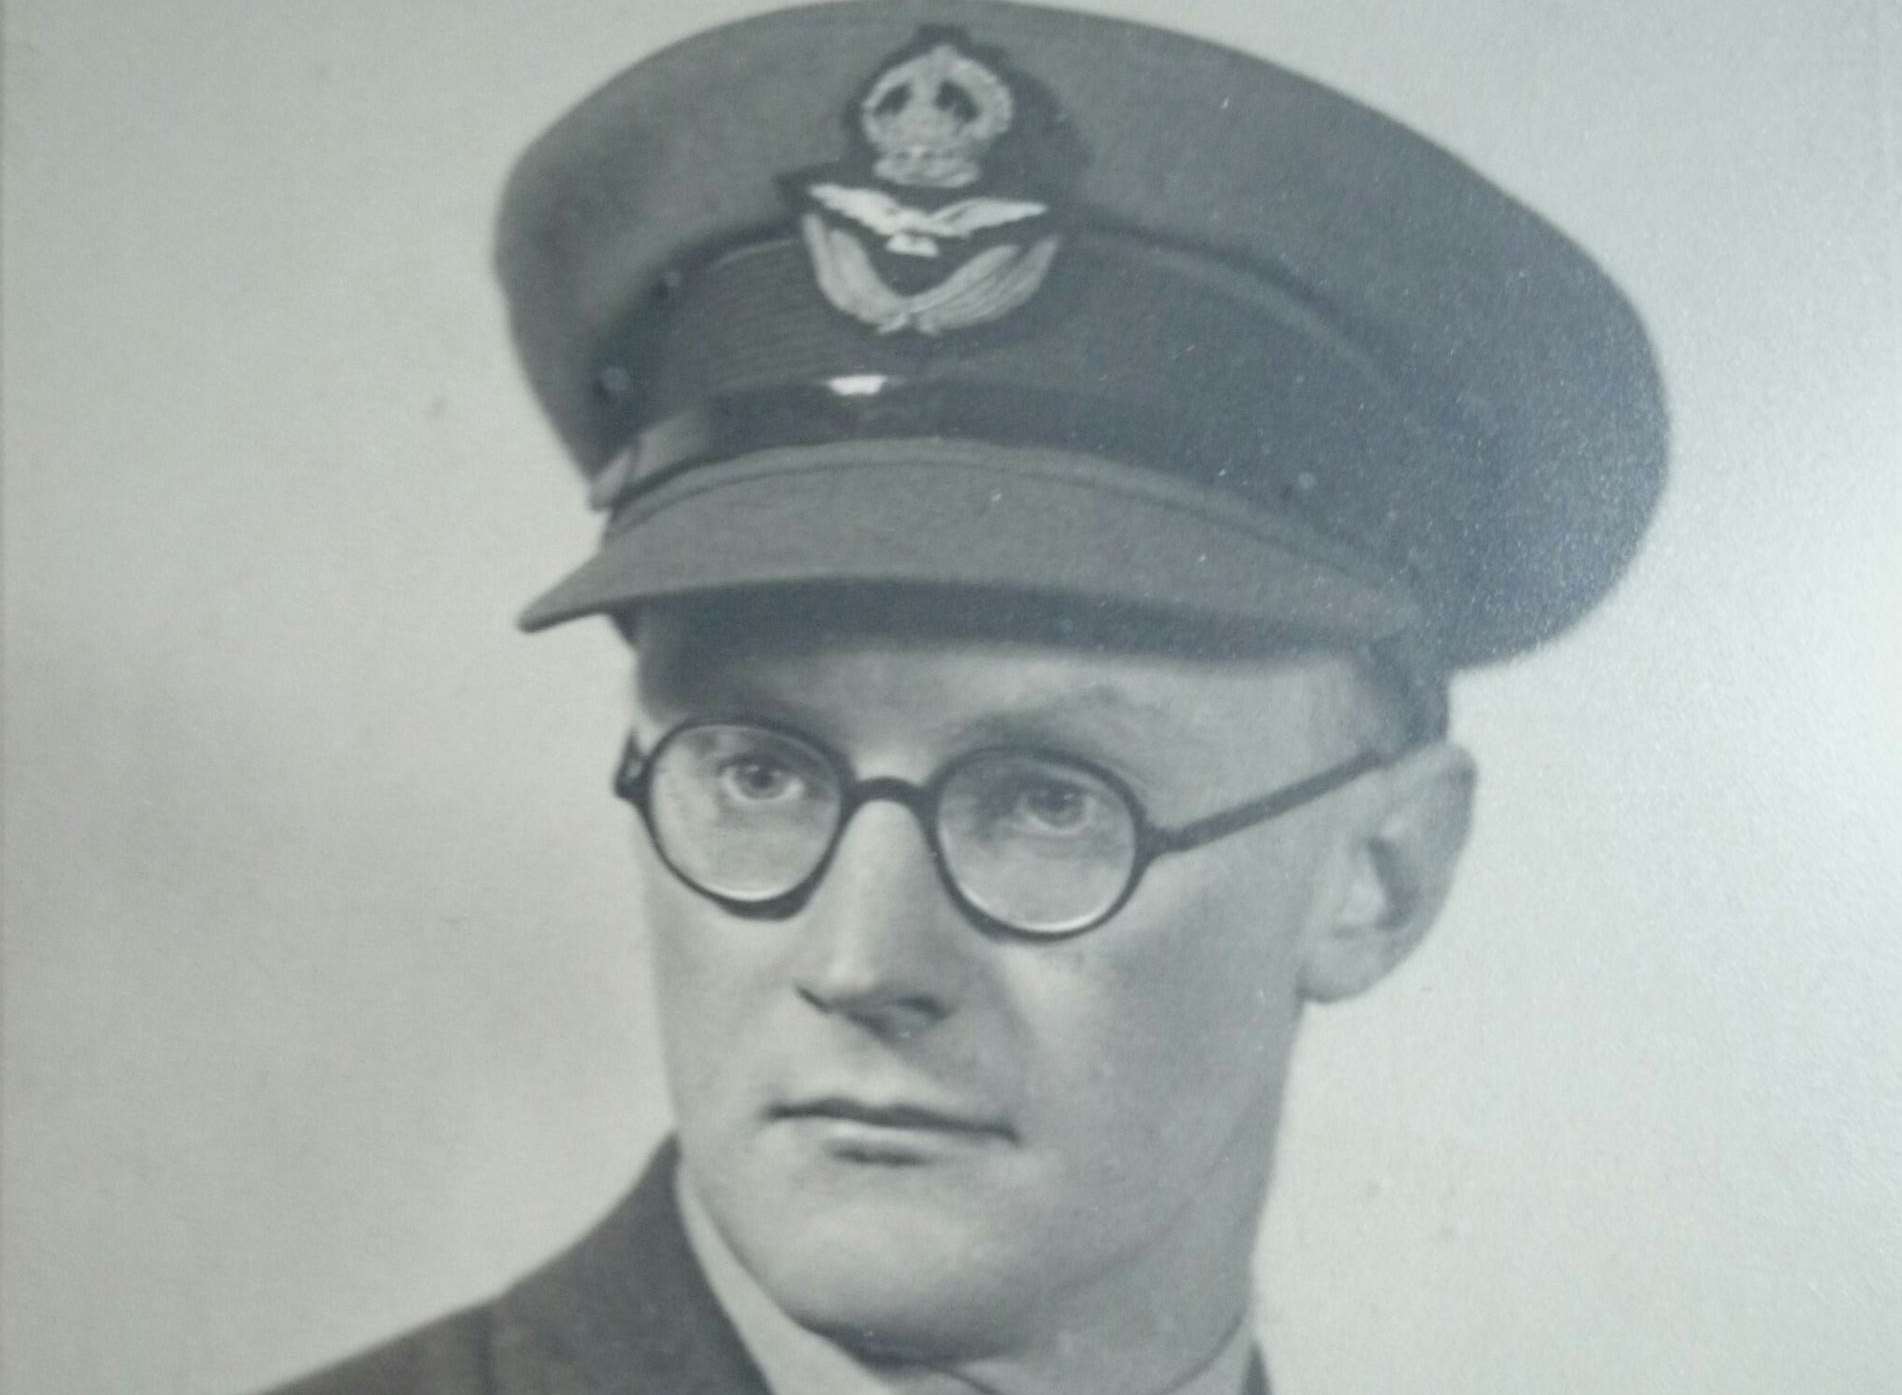 Mr Barlow in his military uniform